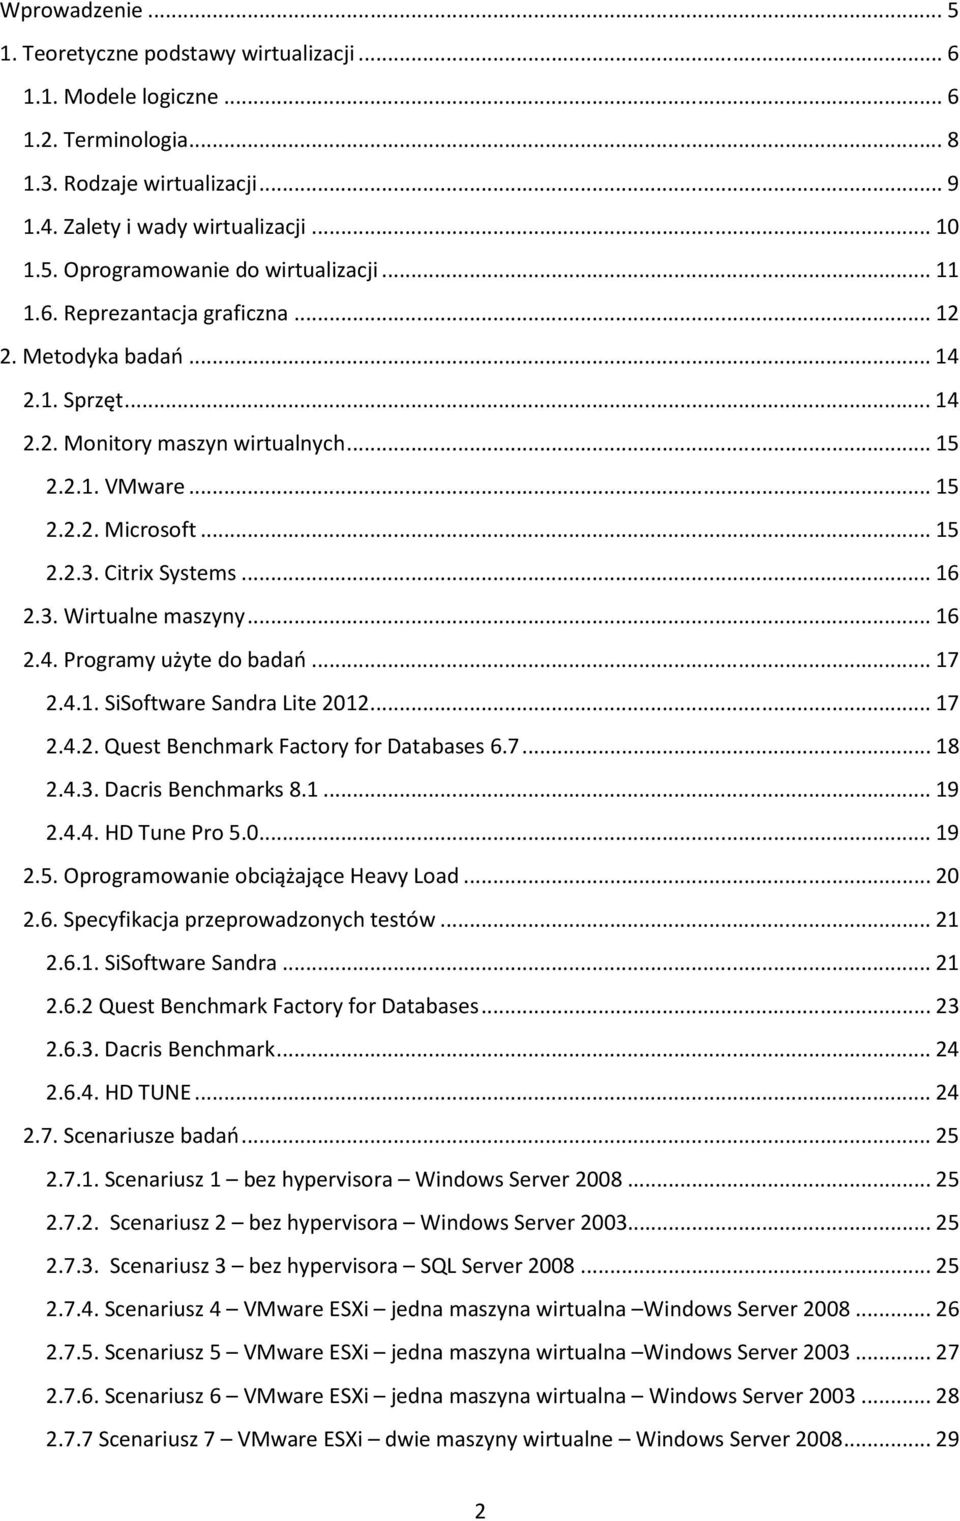 .. 16 2.4. Programy użyte do badań... 17 2.4.1. SiSoftware Sandra Lite 2012... 17 2.4.2. Quest Benchmark Factory for Databases 6.7... 18 2.4.3. Dacris Benchmarks 8.1... 19 2.4.4. HD Tune Pro 5.